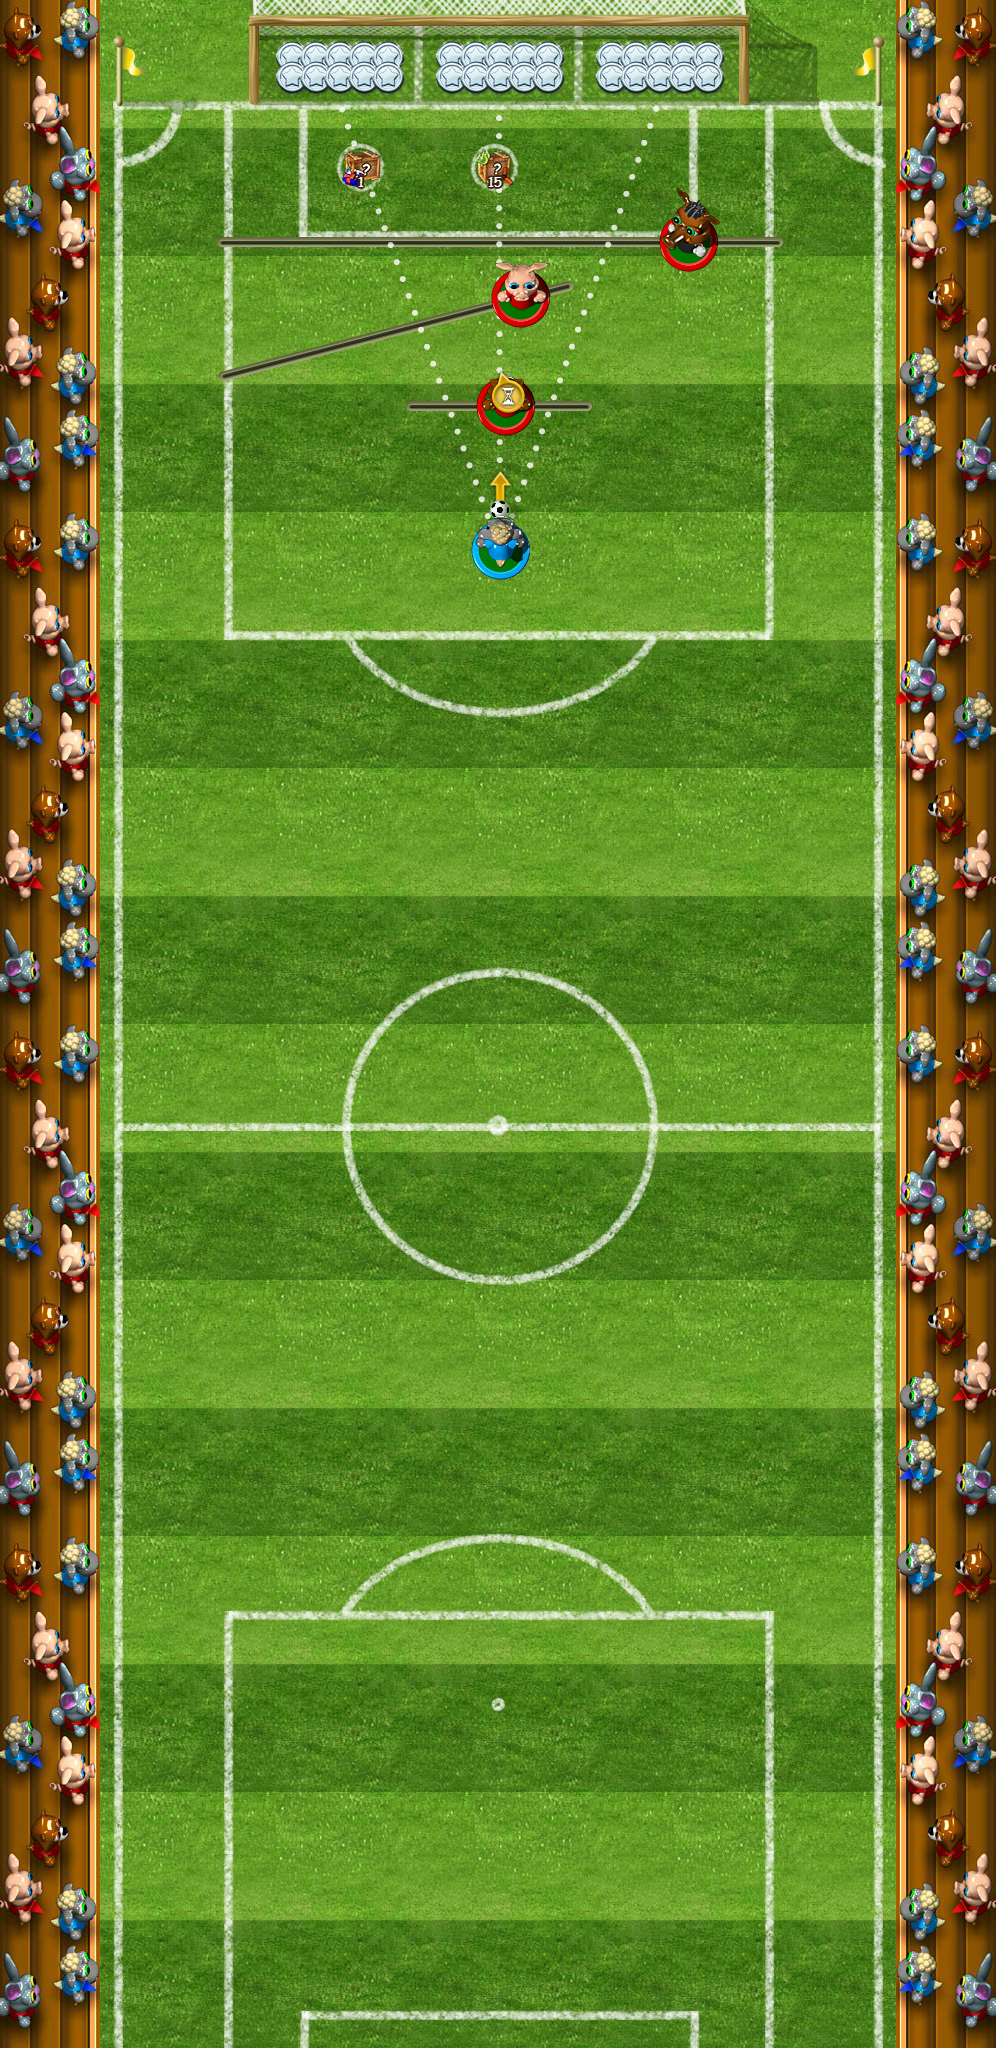 soccerjul2019_layout4.png